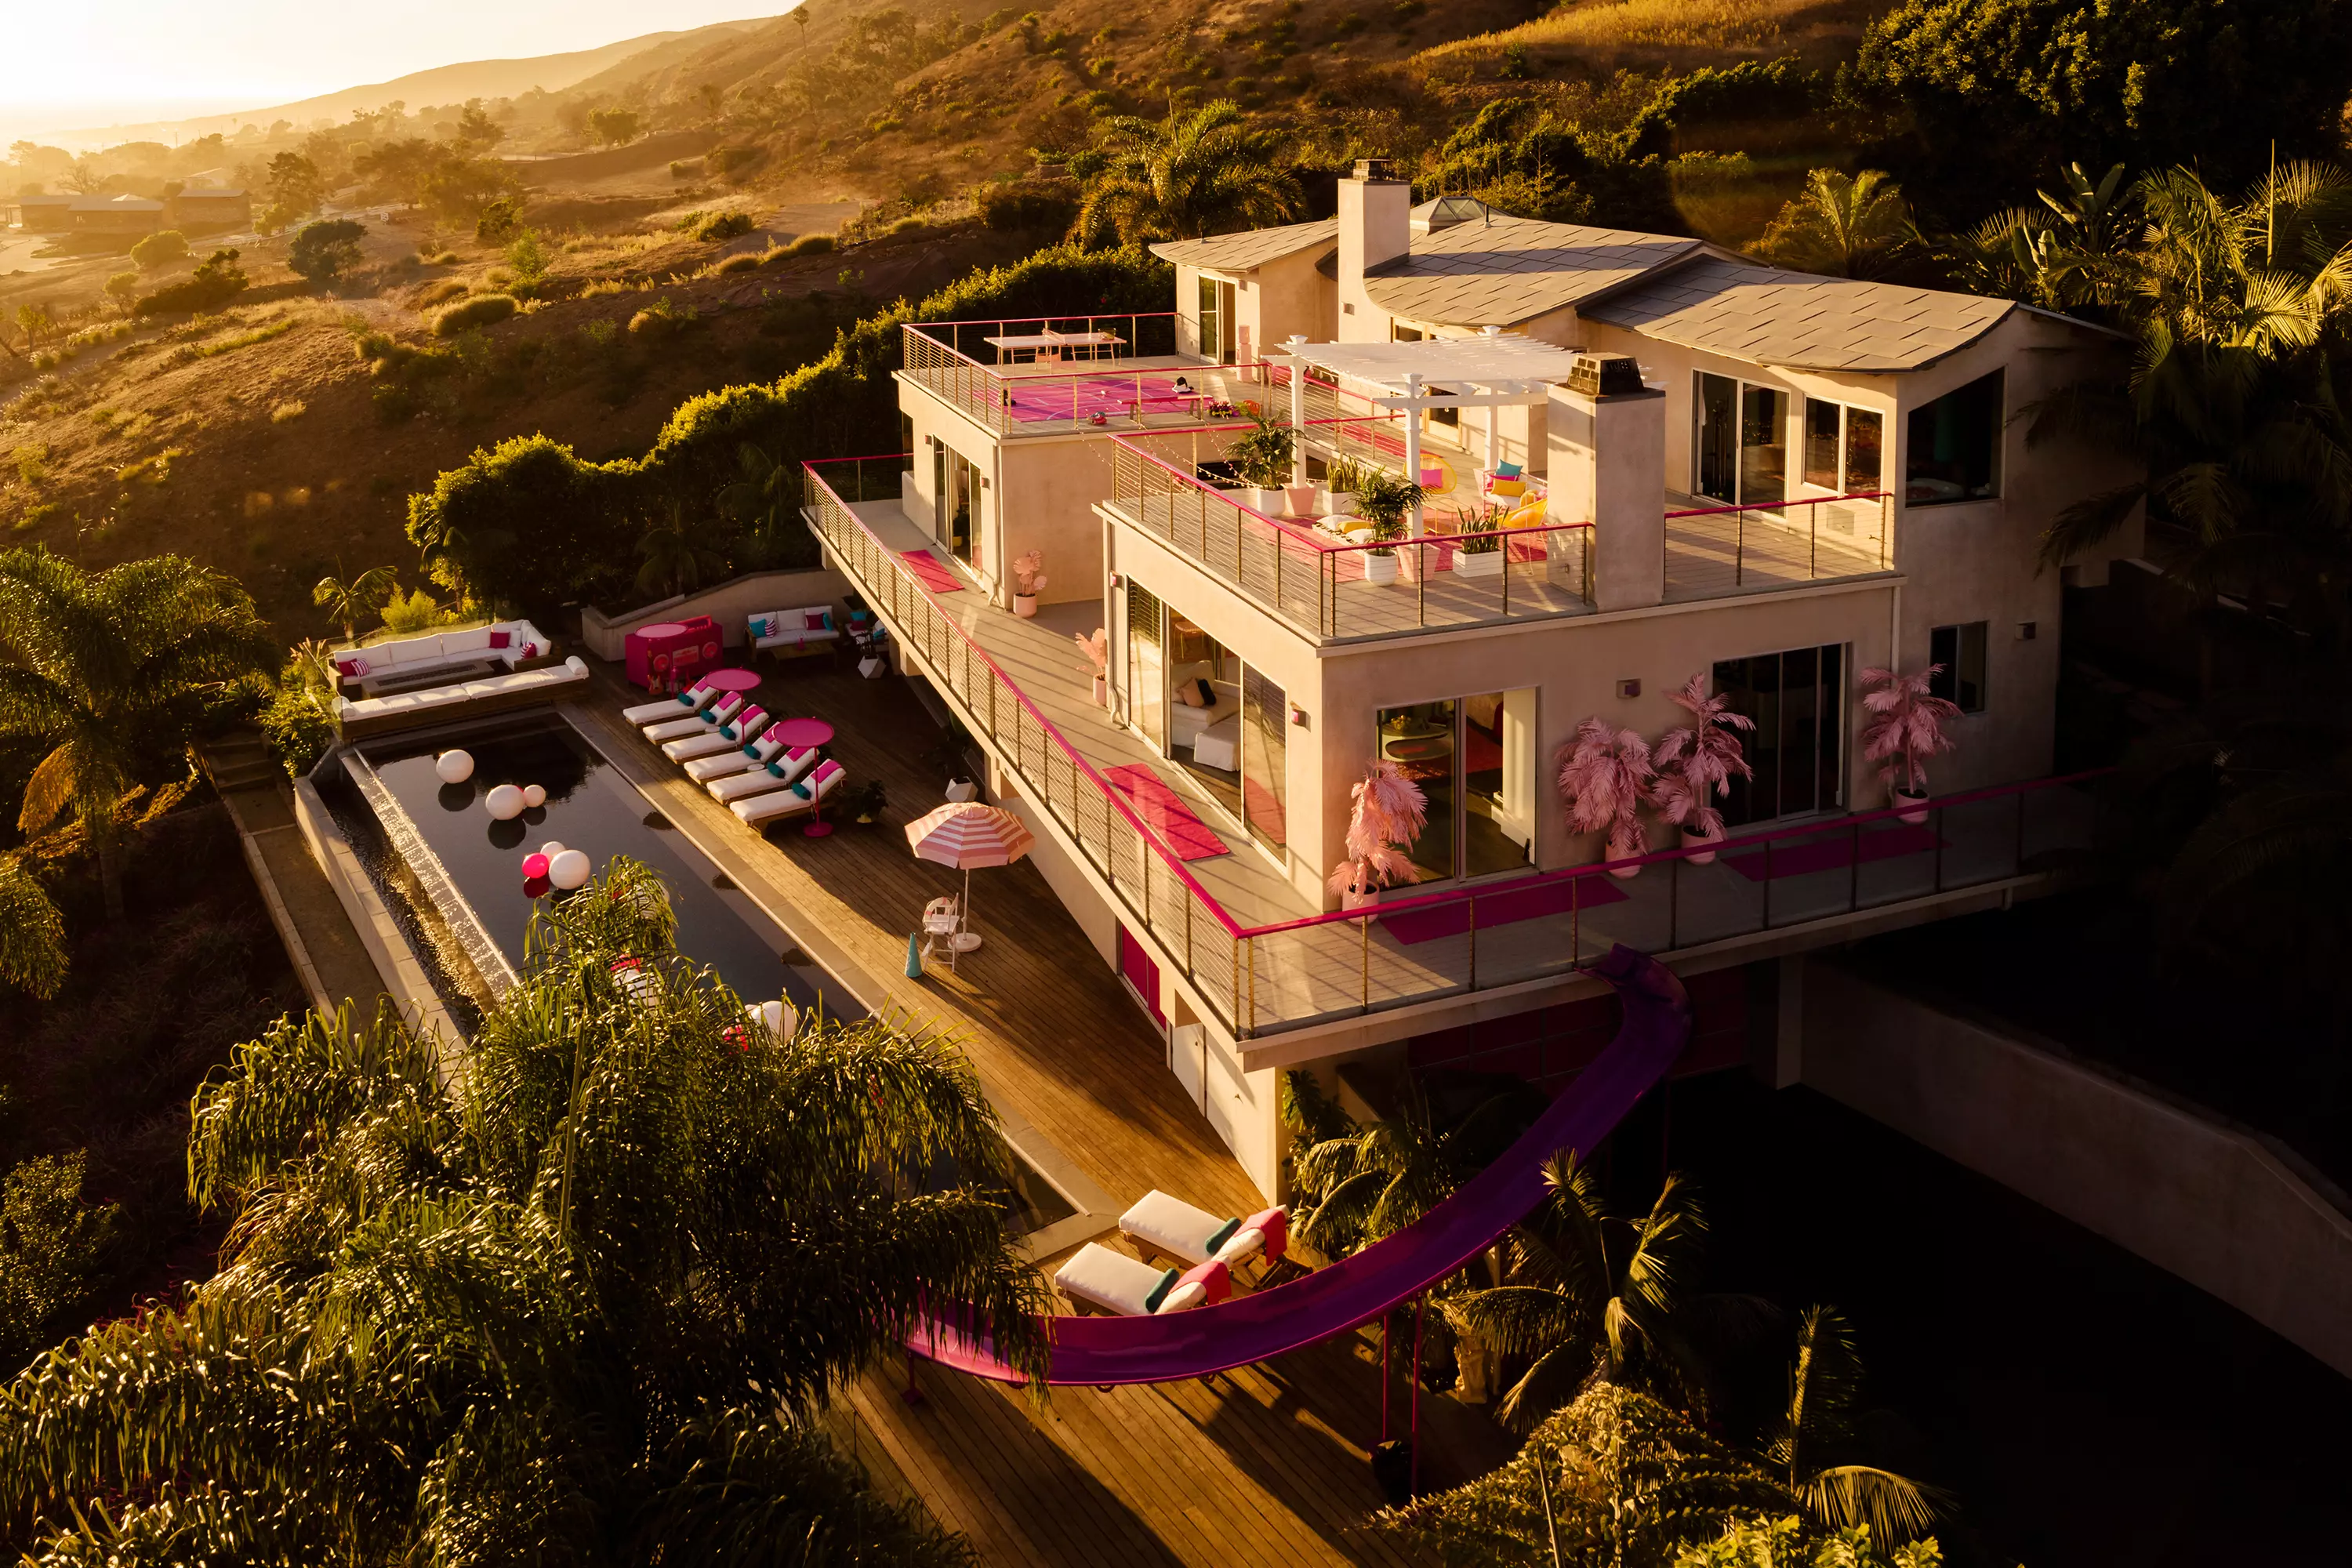 The incredible home is located in Malibu, California. (